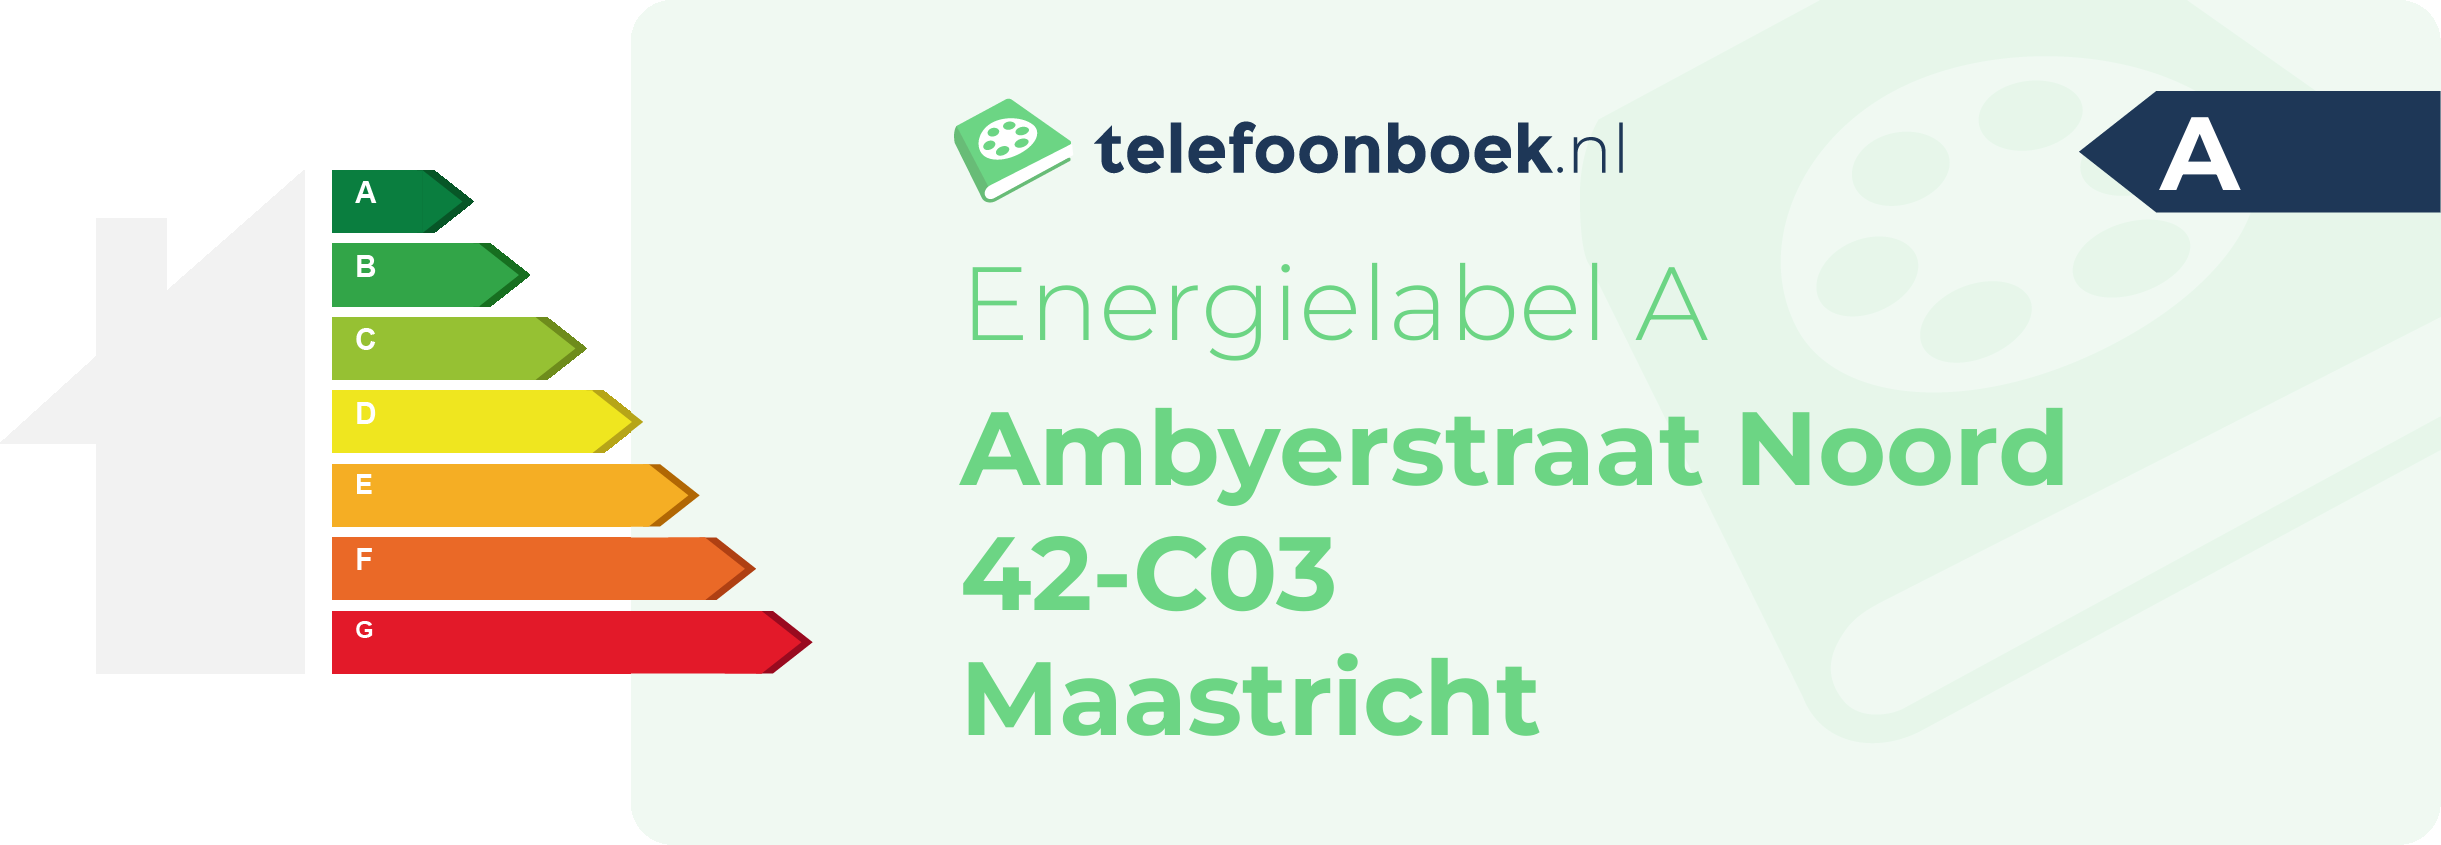 Energielabel Ambyerstraat Noord 42-C03 Maastricht